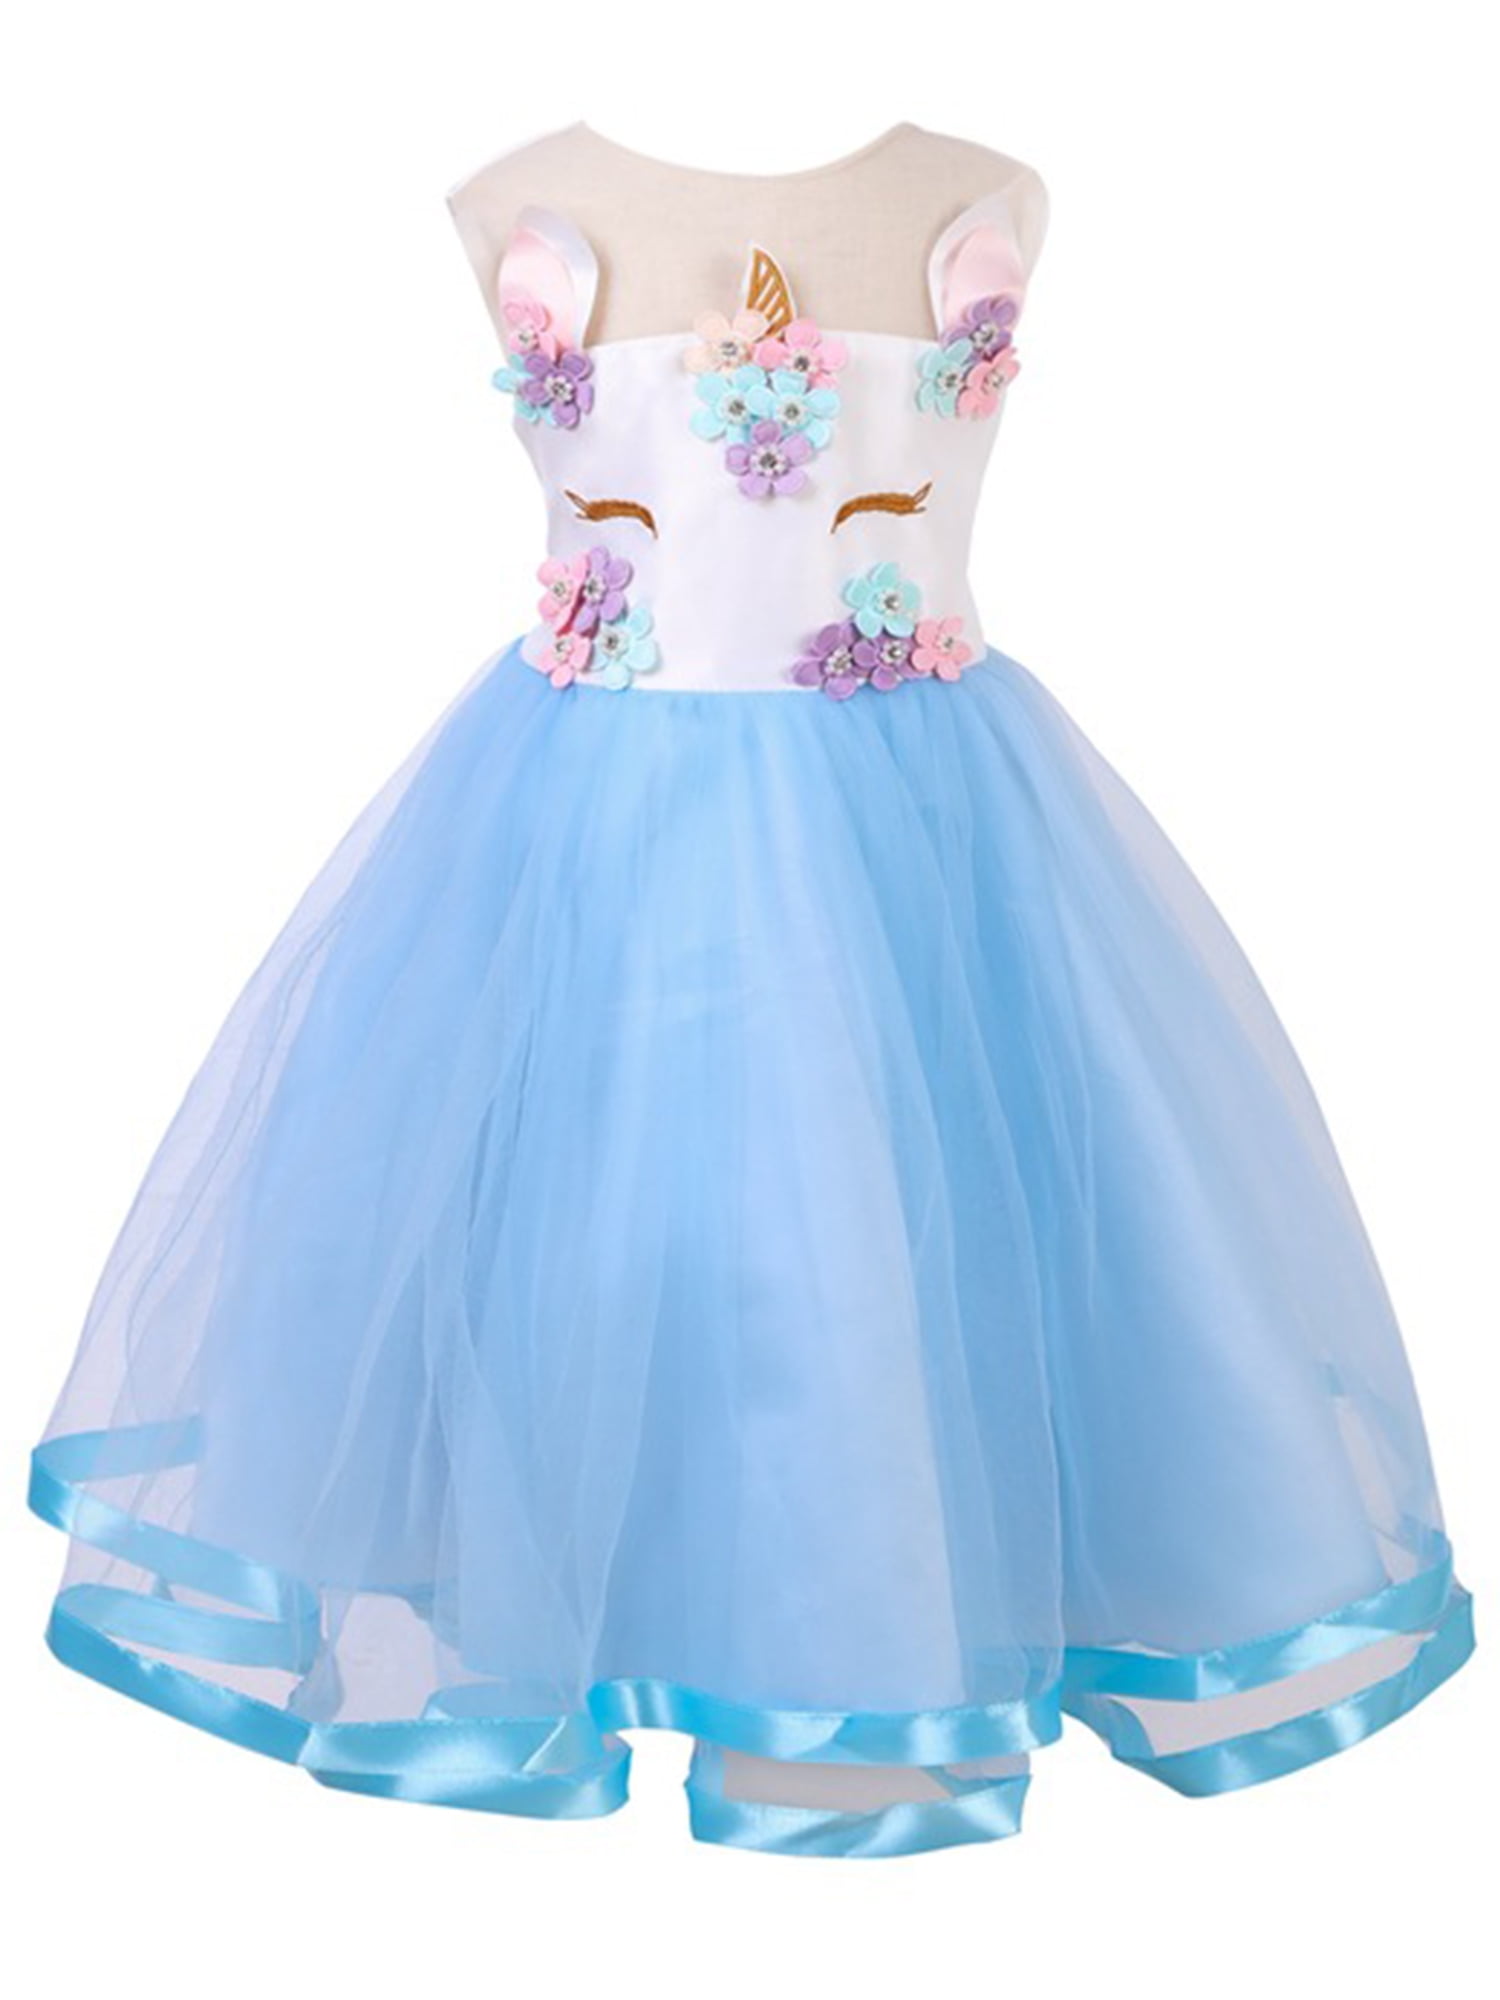 Fiream Rainbow Unicorn Dresses for Girls Tulle Dress Long Sleeve 2-10 Years Old